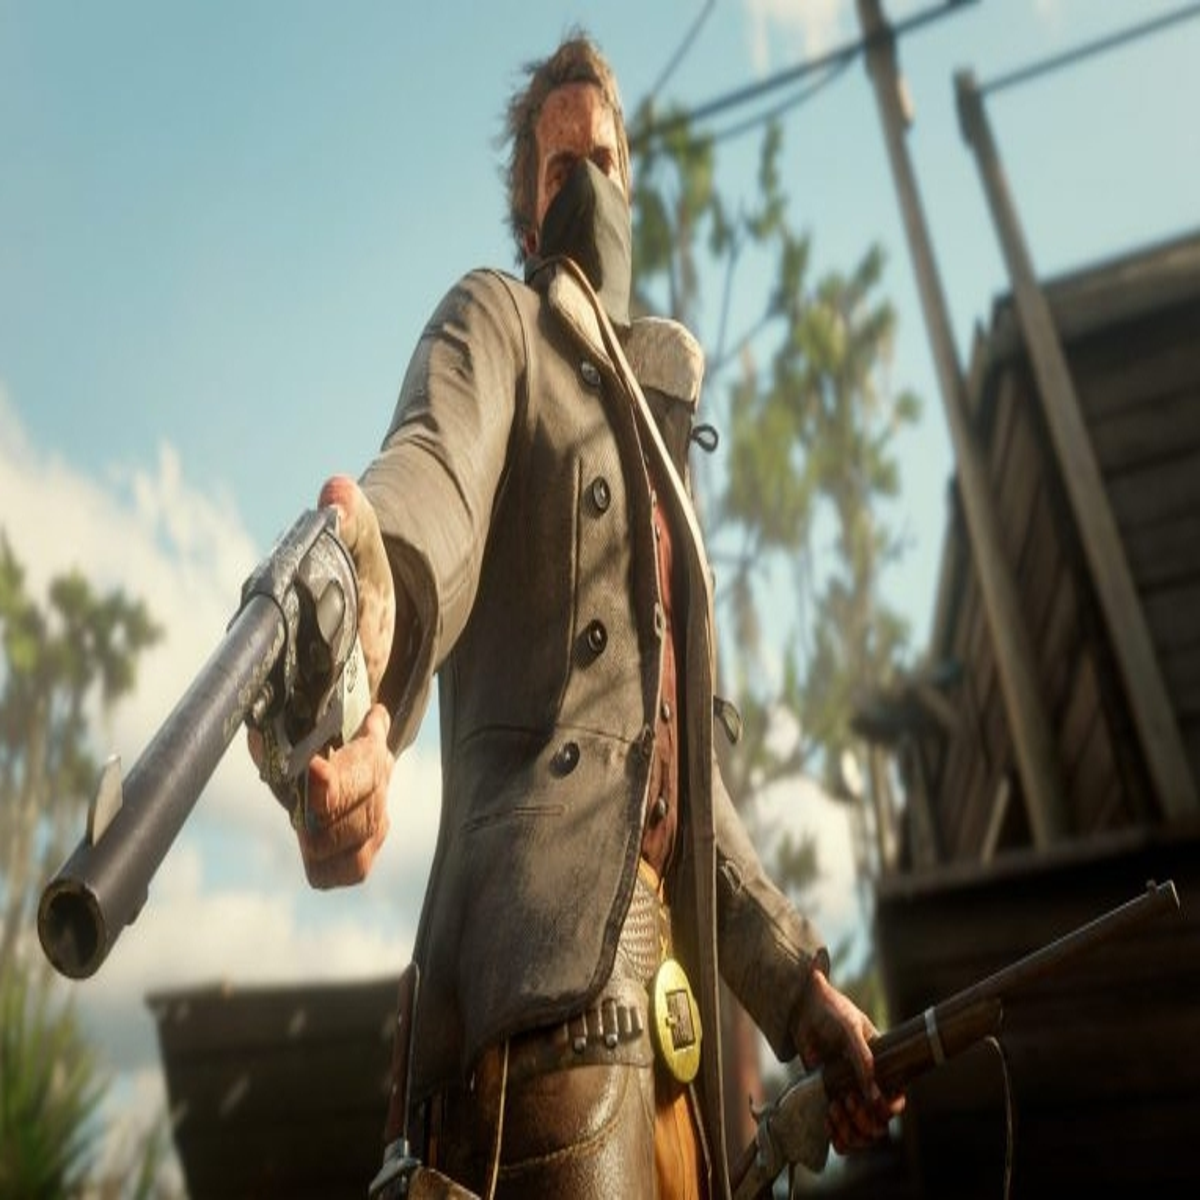 Red Dead Redemption 2 llegará a PC, según Michael Pachter